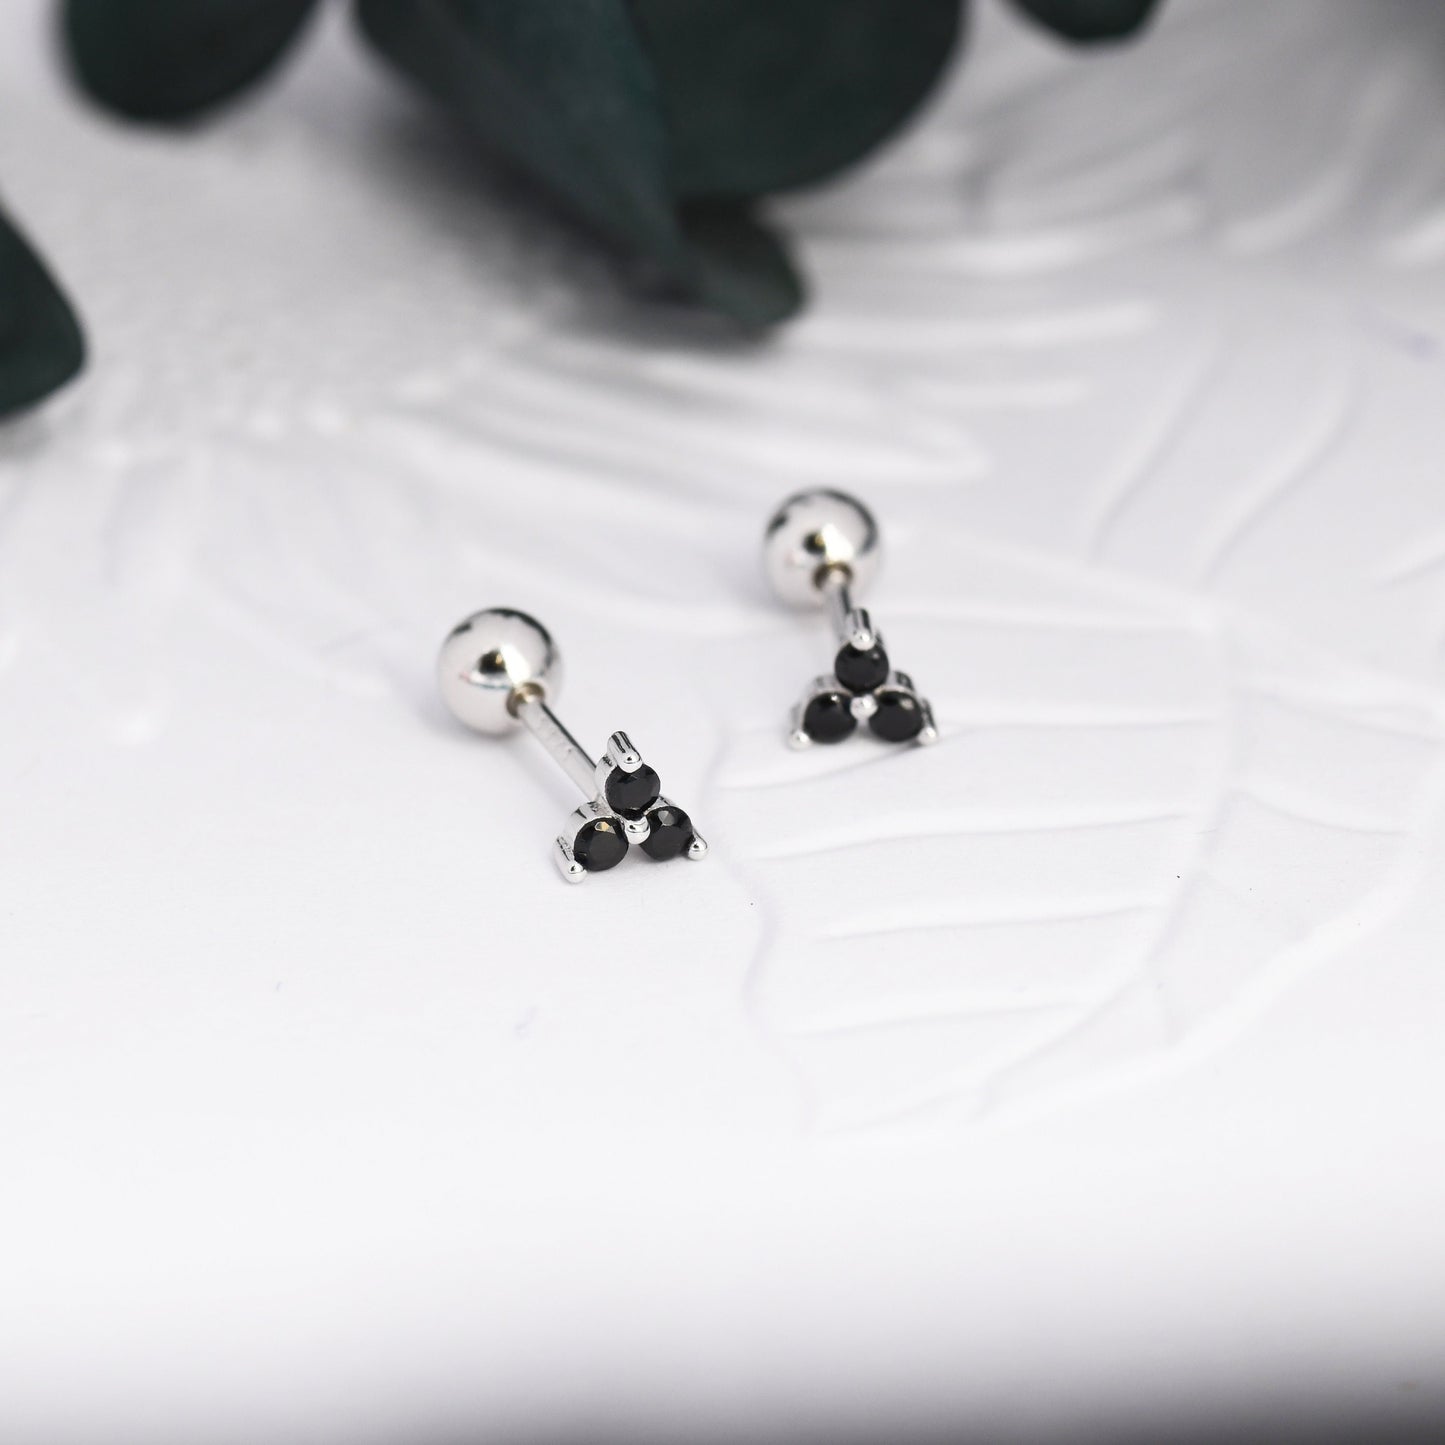 Tiny Black CZ Trio Screw Back Earrings in Sterling Silver, Three CZ Earrings, Simple and Minimalist, Geometric and Discreet, Black Screwback